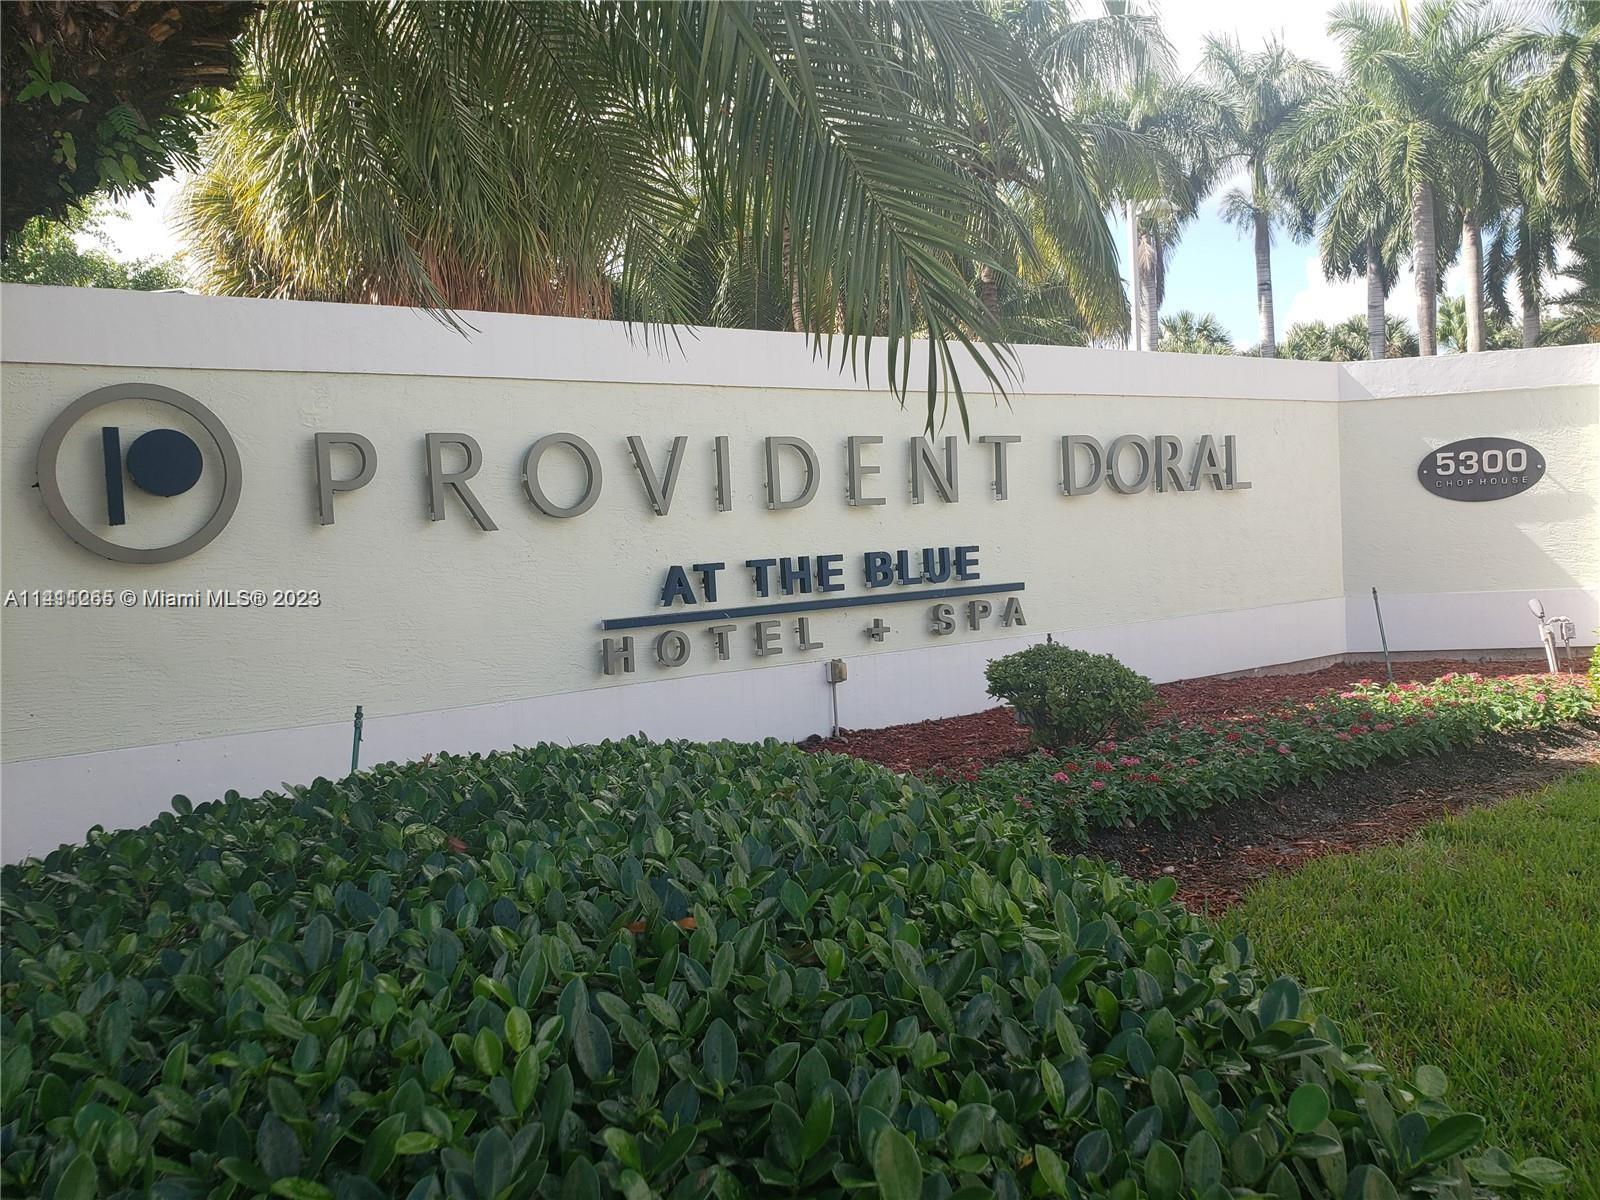 Residential, Doral, Florida image 10